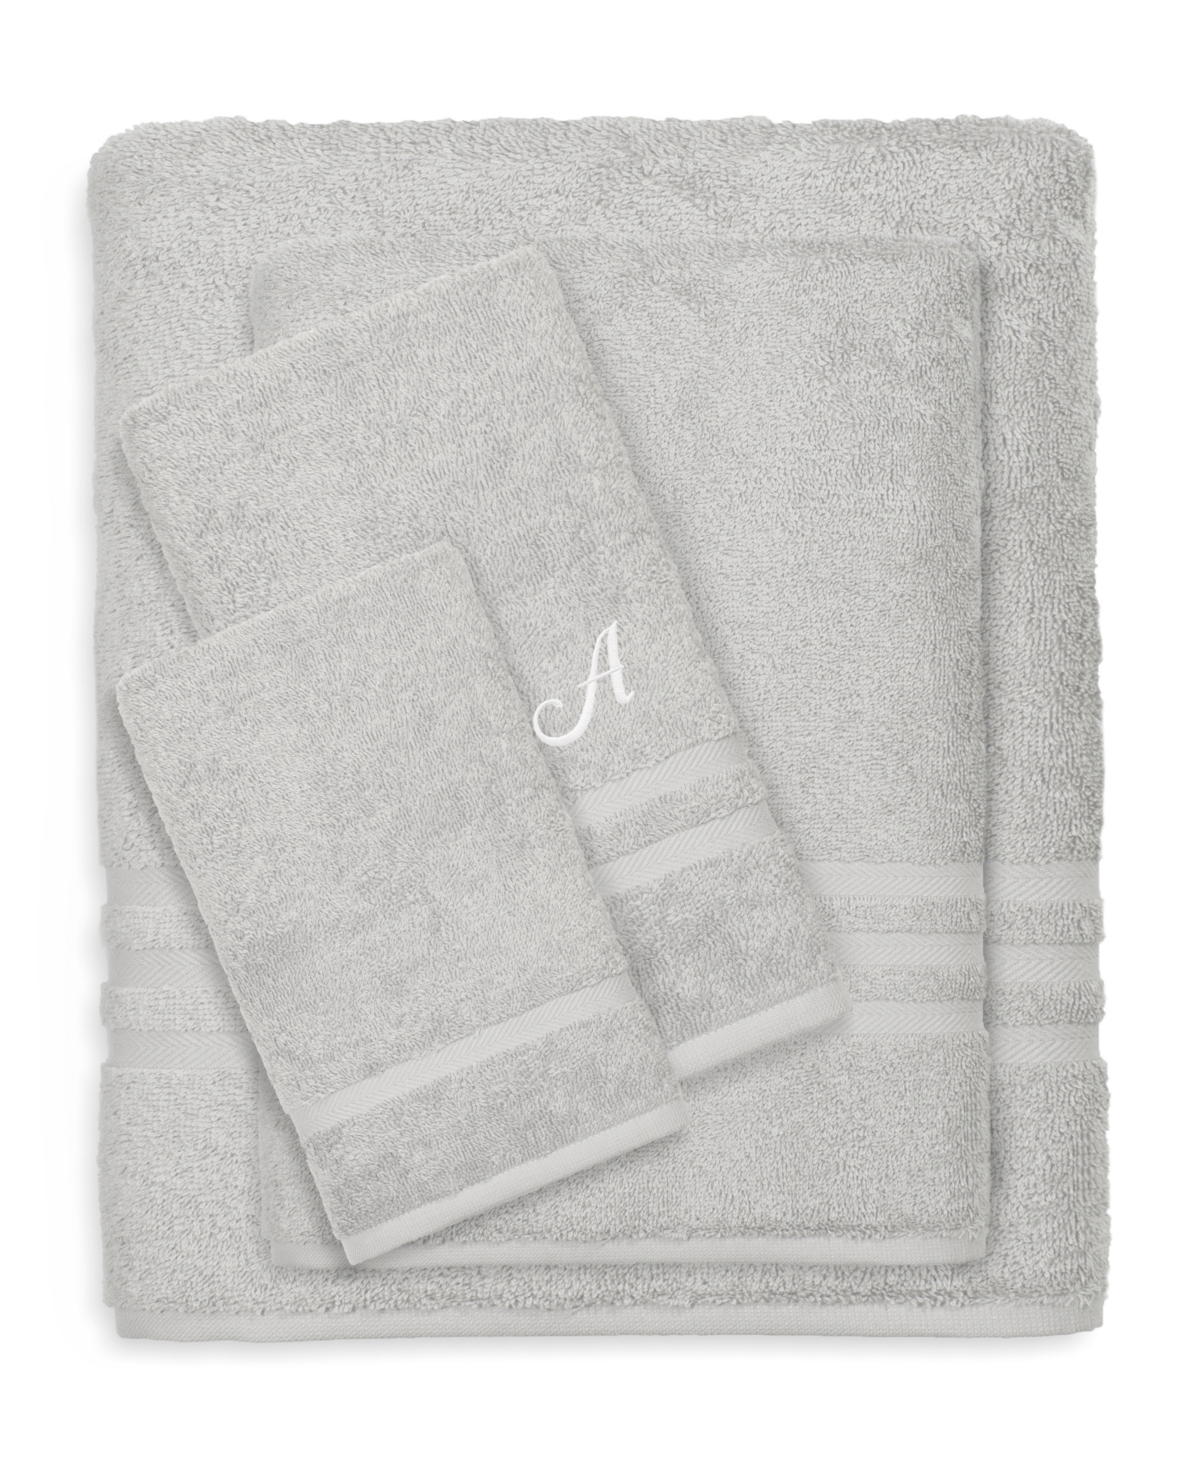 Linum Home Textiles Turkish Cotton Personalized Denzi Towel Set, 4 Piece In Gray